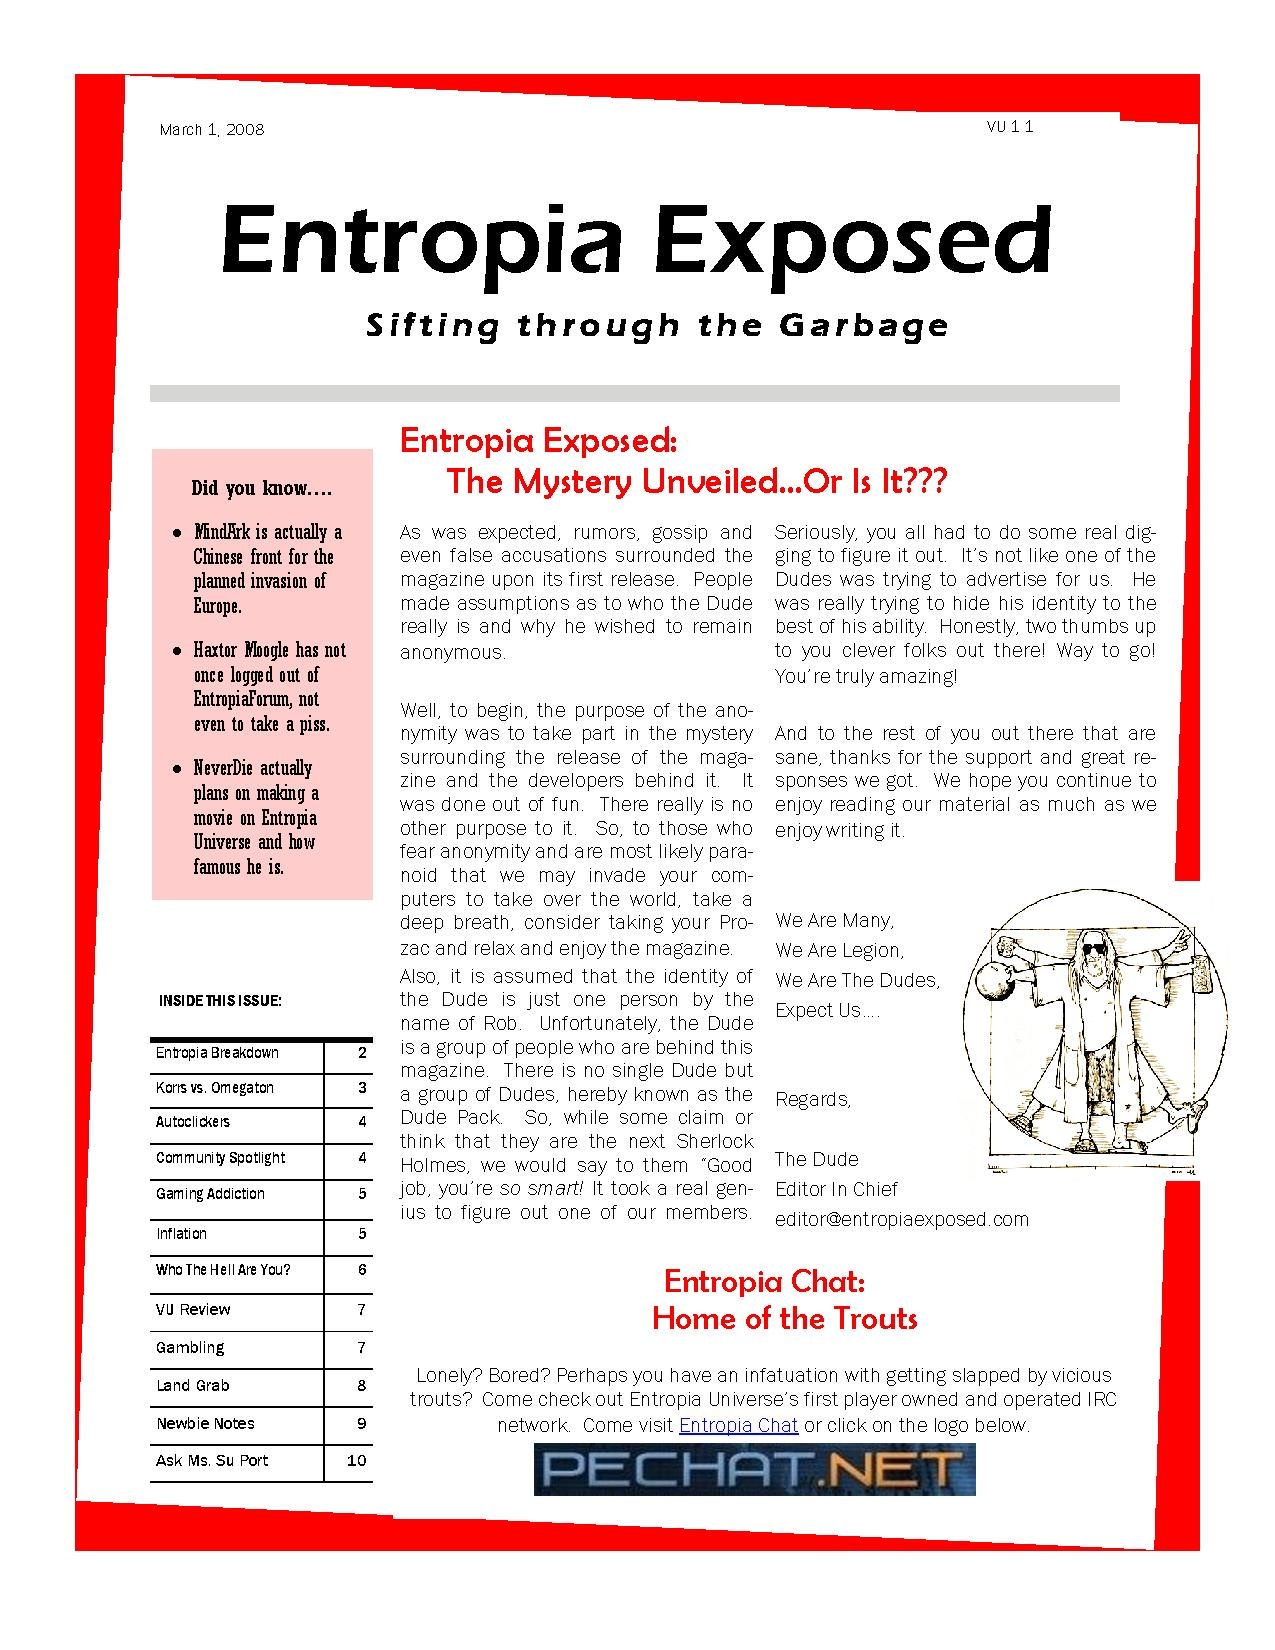 Entropia Exposed VU11 March 2008.pdf